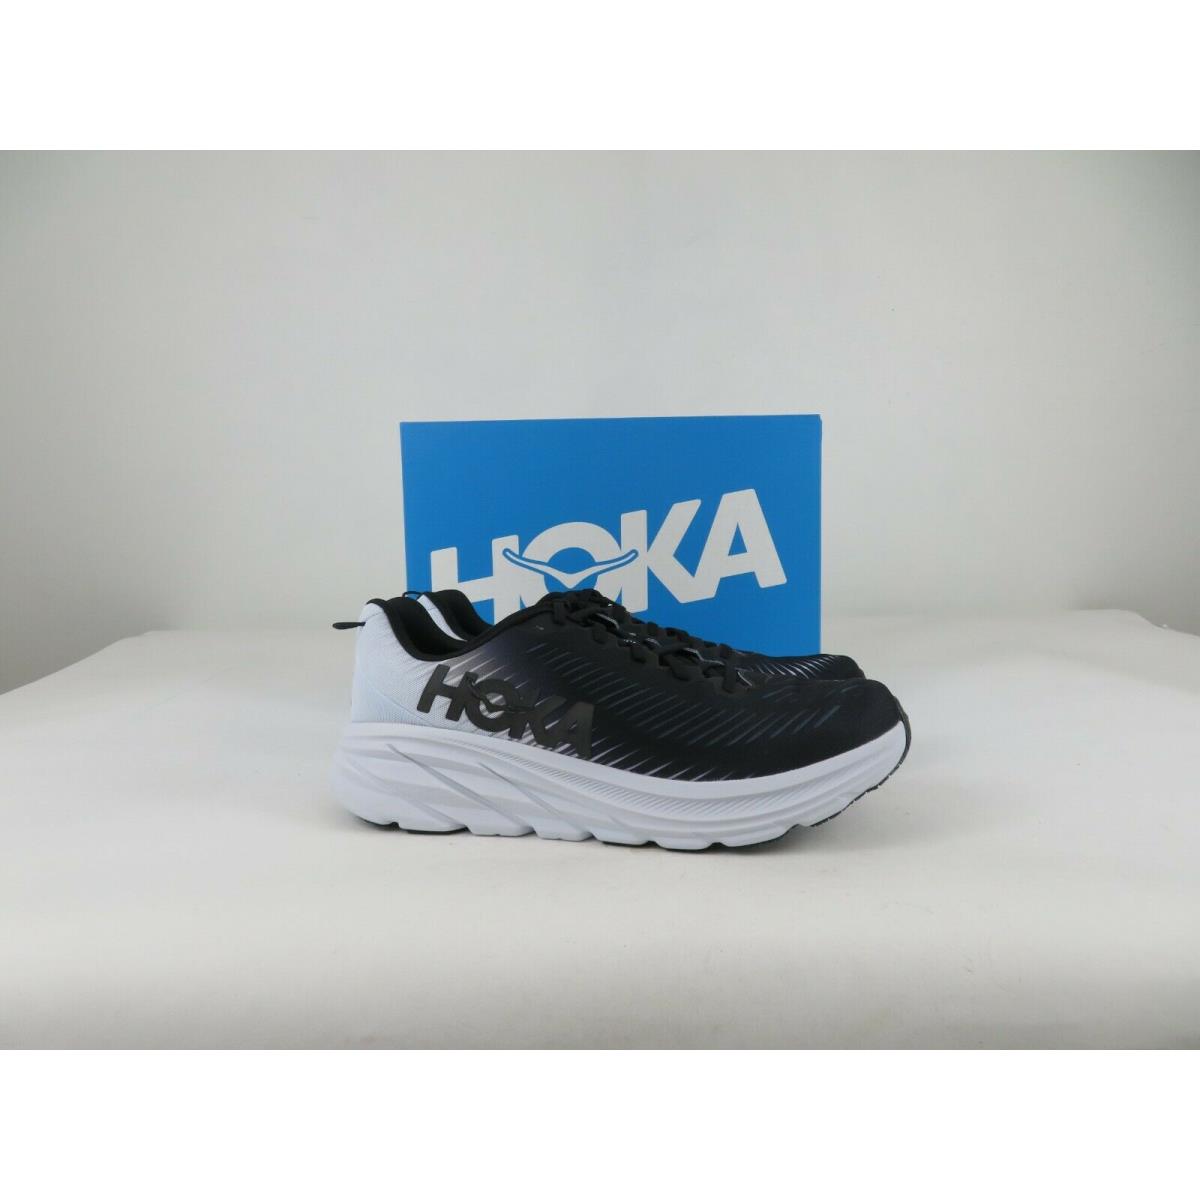 Hoka One One Rincon 3 Shoe Men 11 D Black White Athletic Running Walking Sneaker